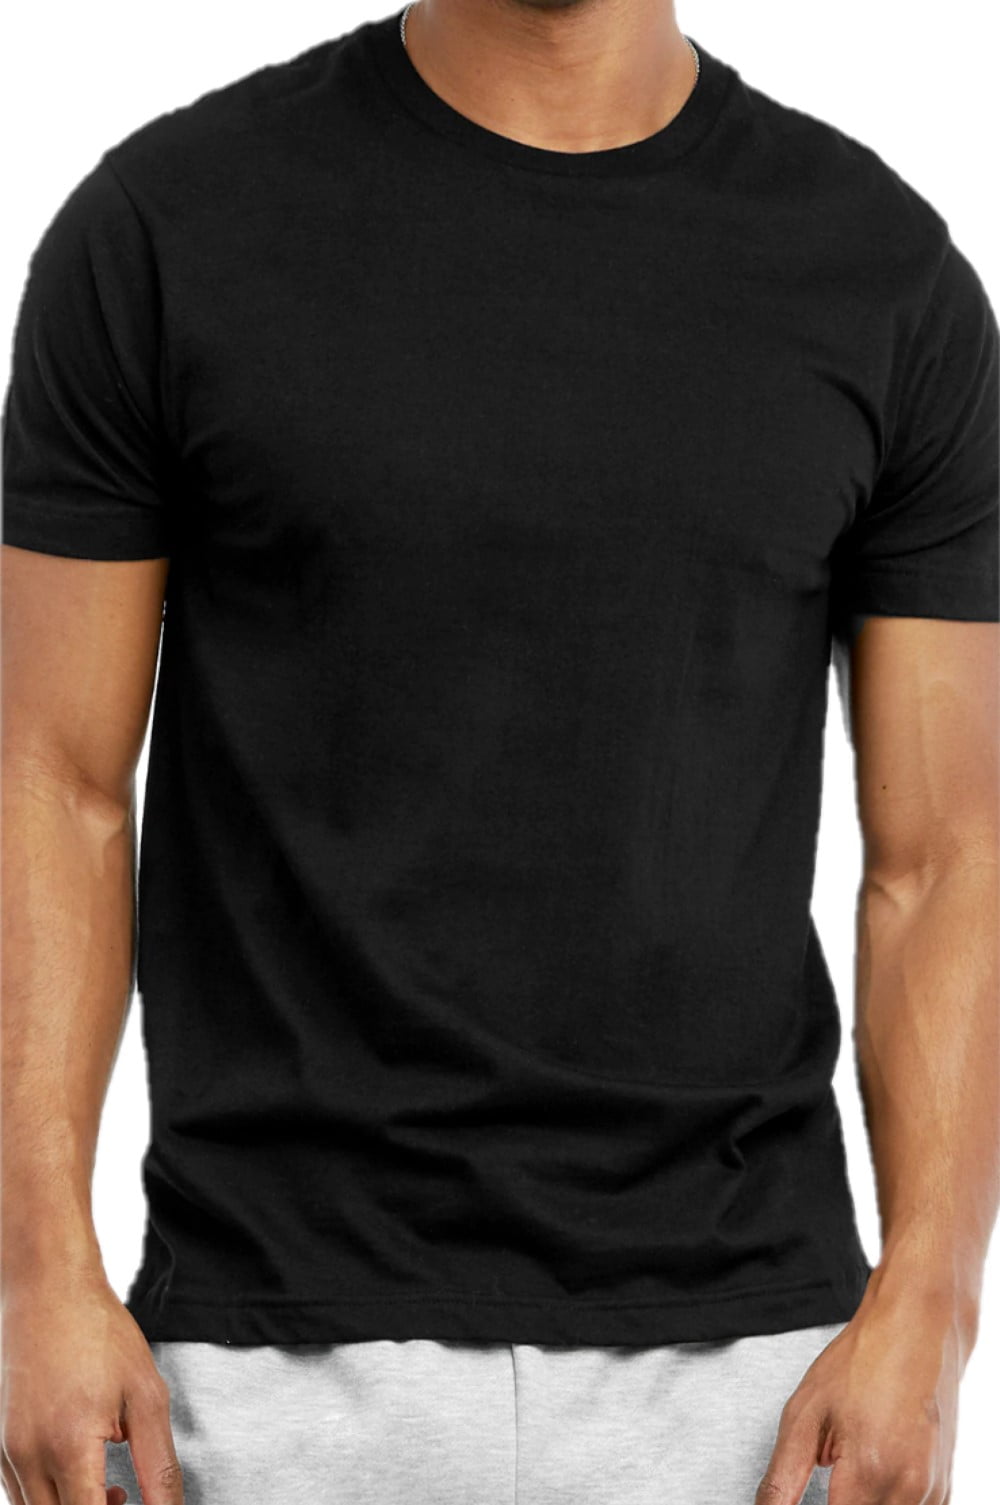 Couver Men's Light Weight Crew Neck Short Sleeve T-Shirt